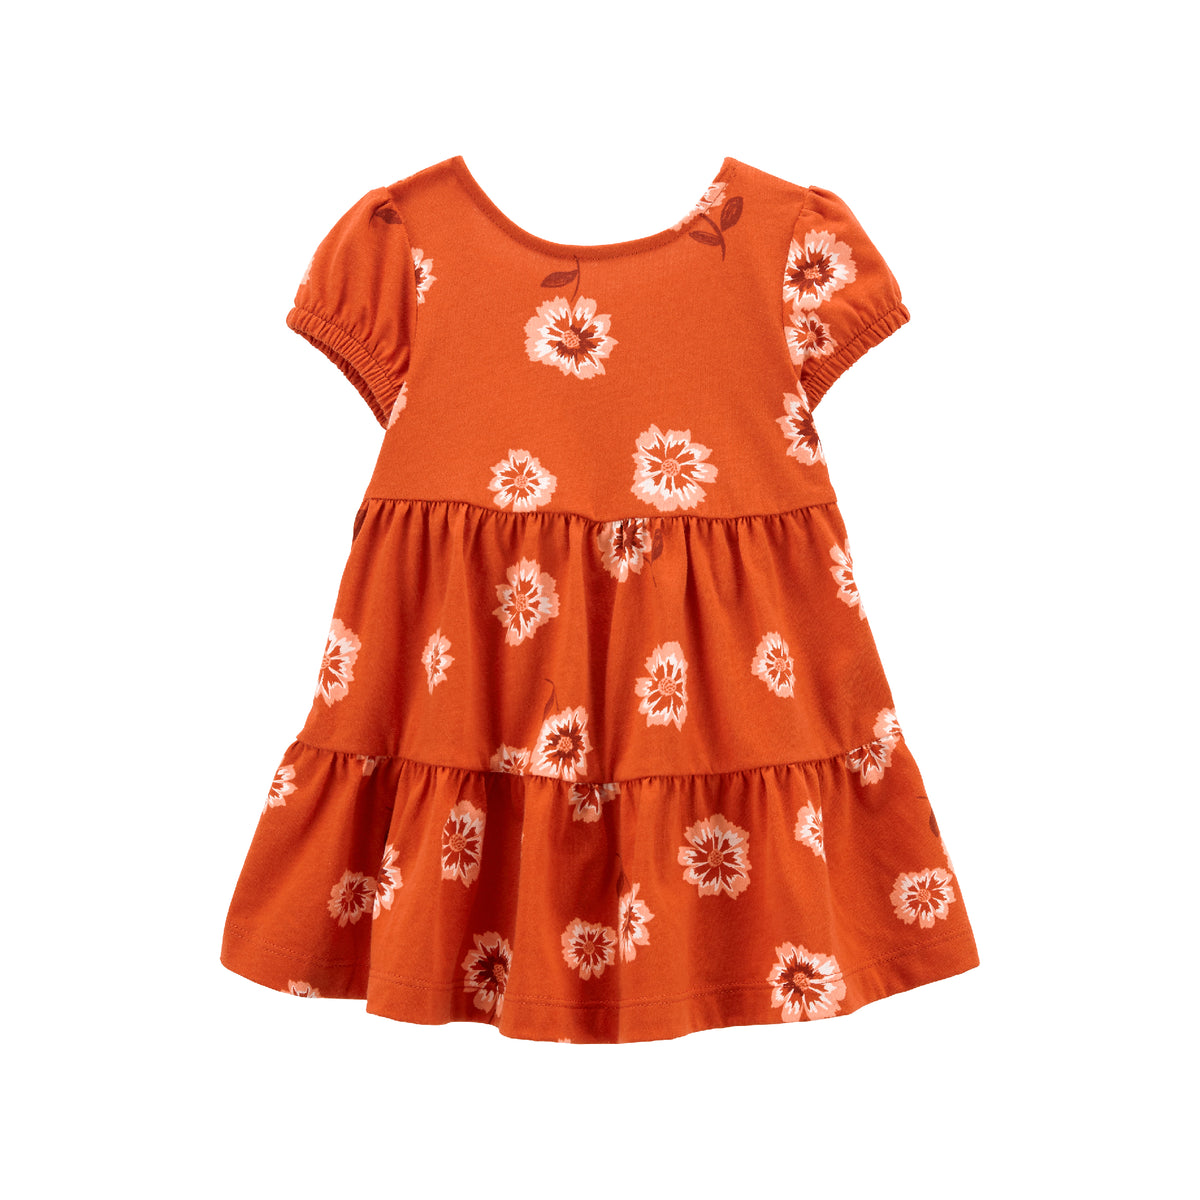 Carter's orange floral graffiti dress (6M-24M)